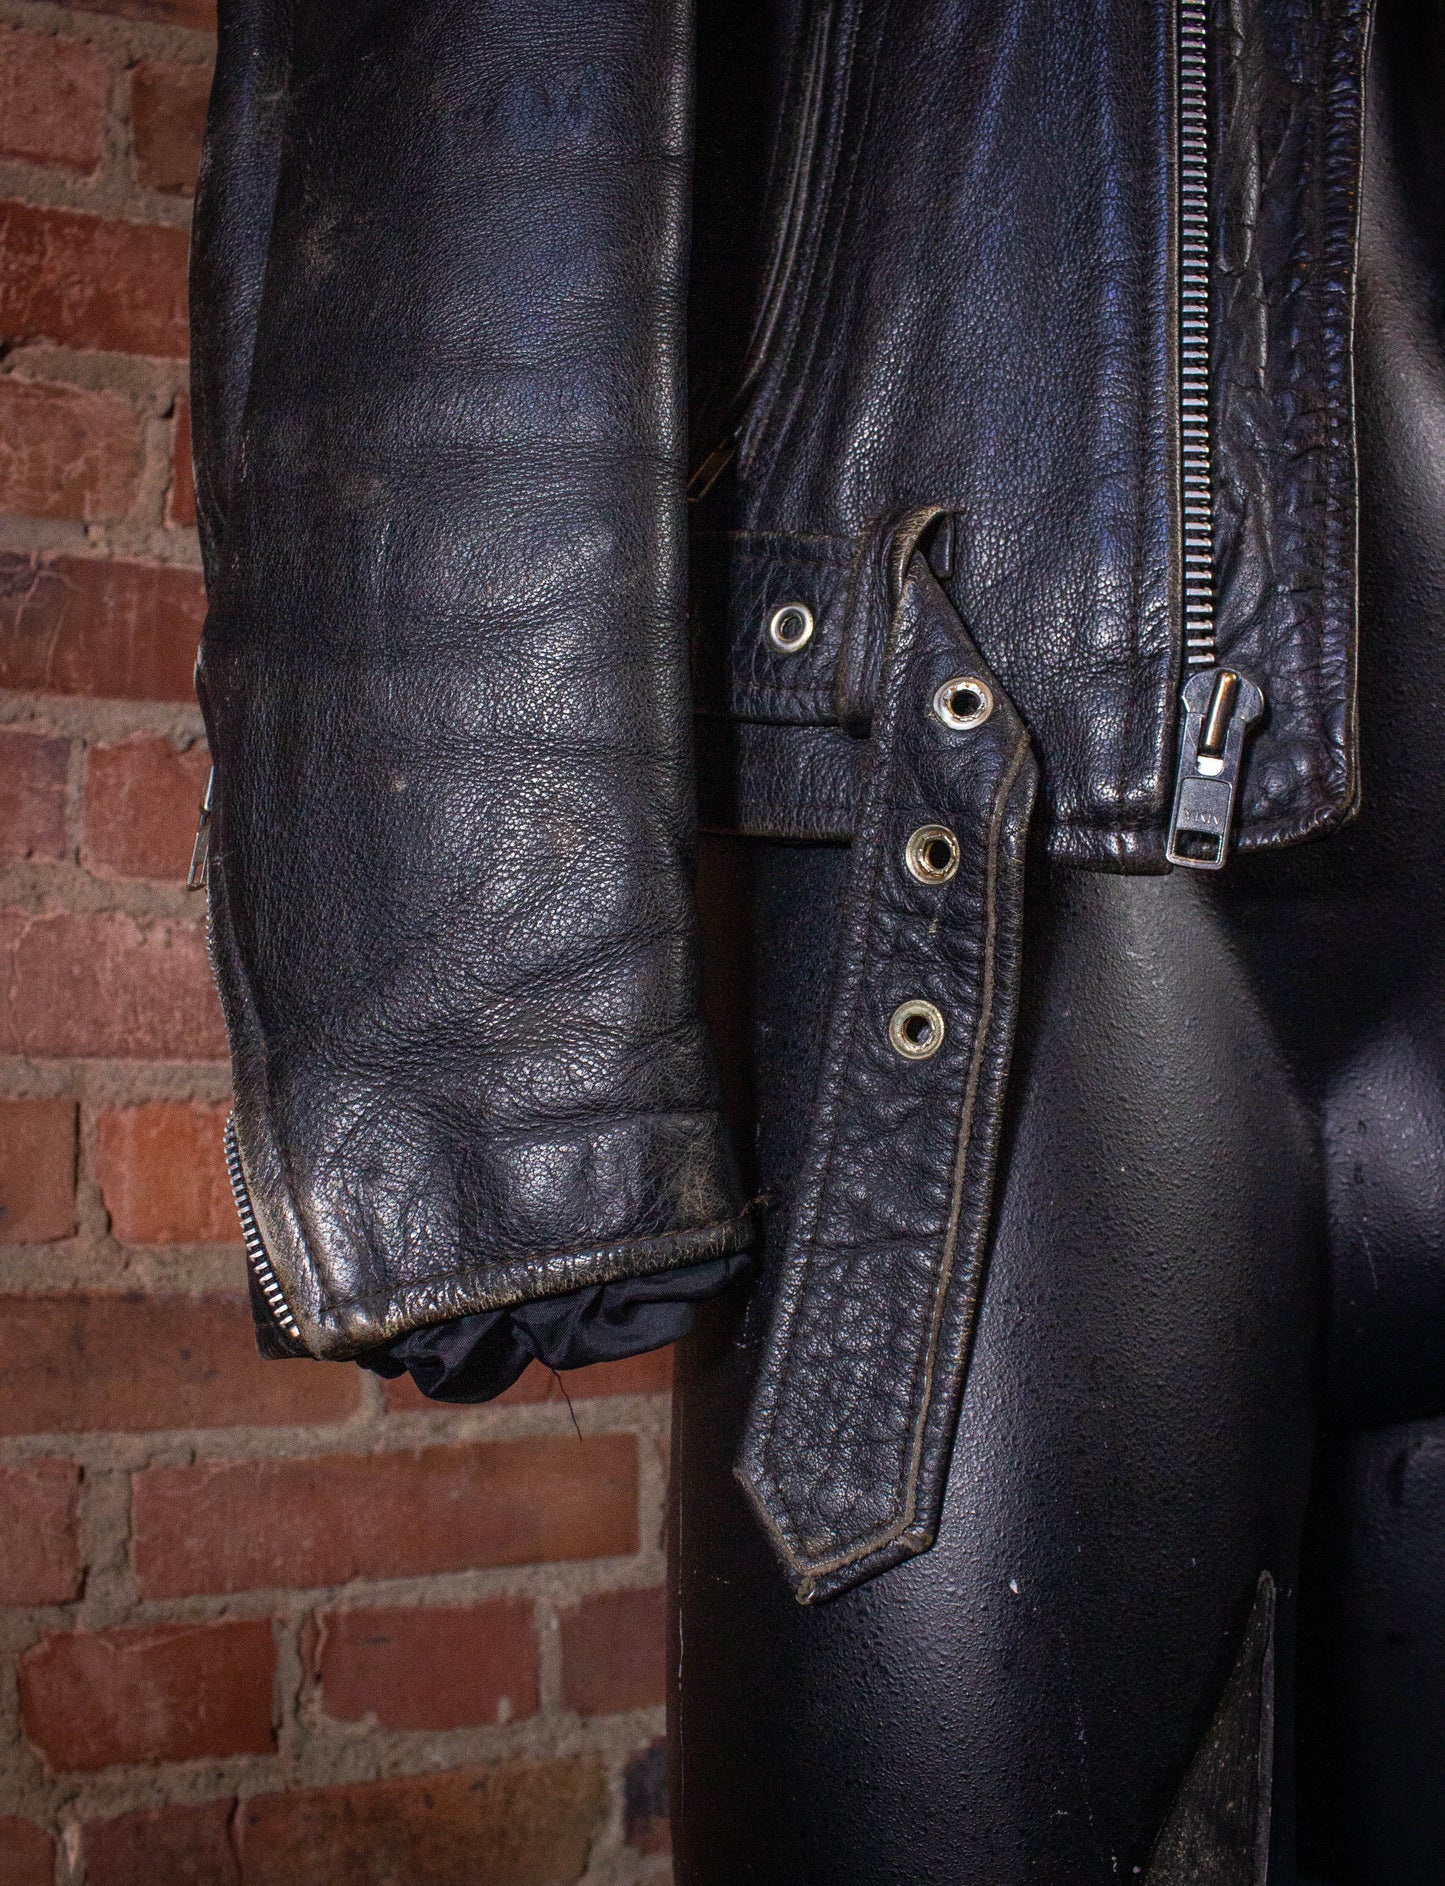 Vintage The Smiths Leather Biker Jacket Black Medium